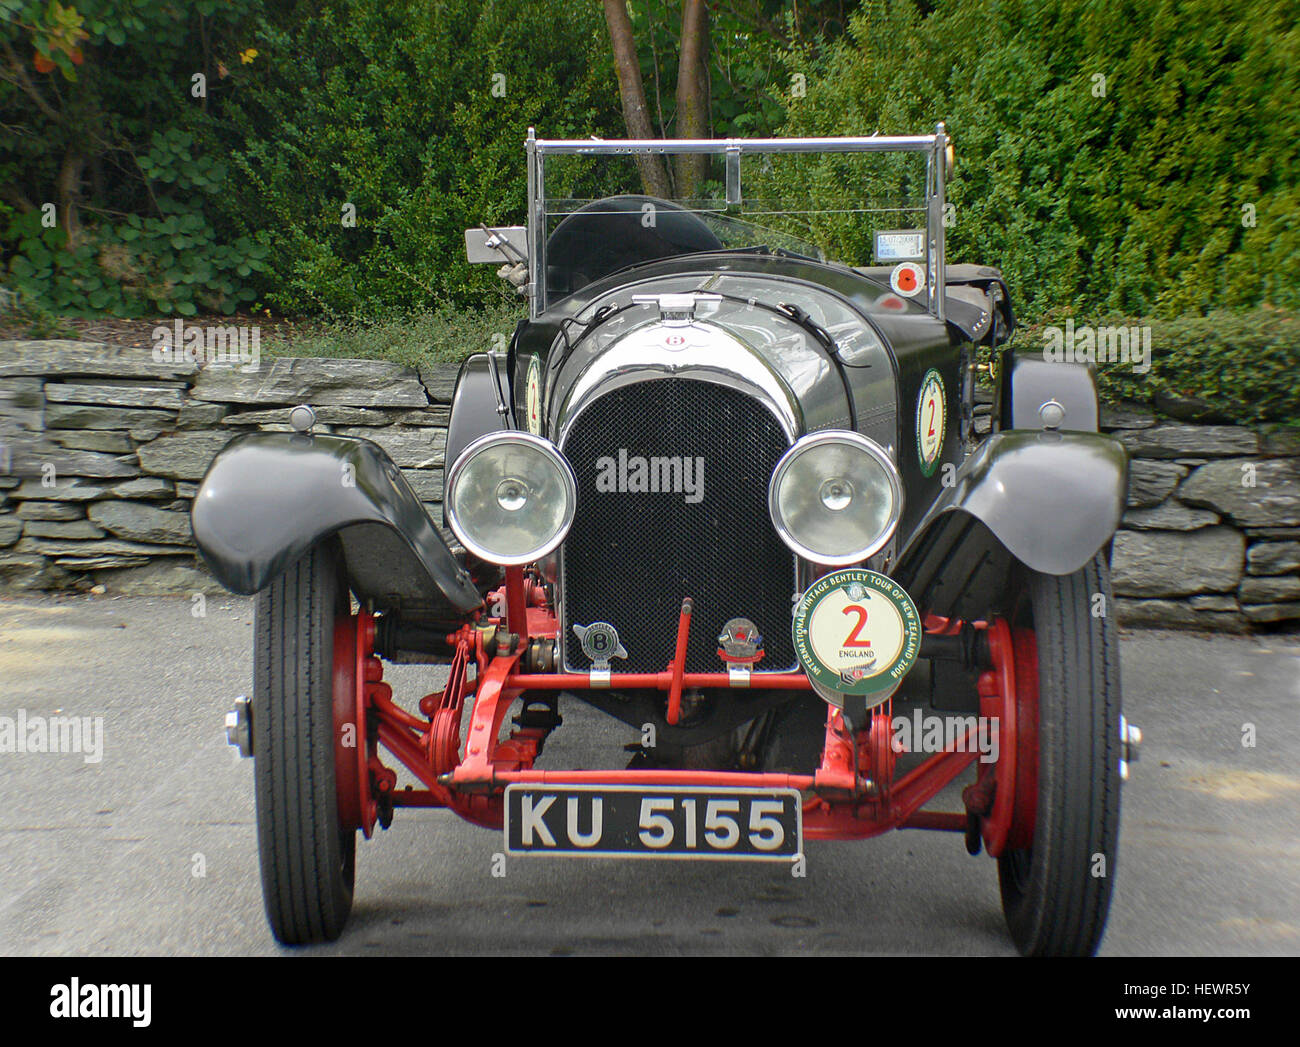 ication (,),1924 3.0 Ltr Bentley,Bridge Camera,British classic cars,Car Shows,Cars,Fast cars,Racing cars,Sports car,Vintage Bentley Rally,bentley Stock Photo